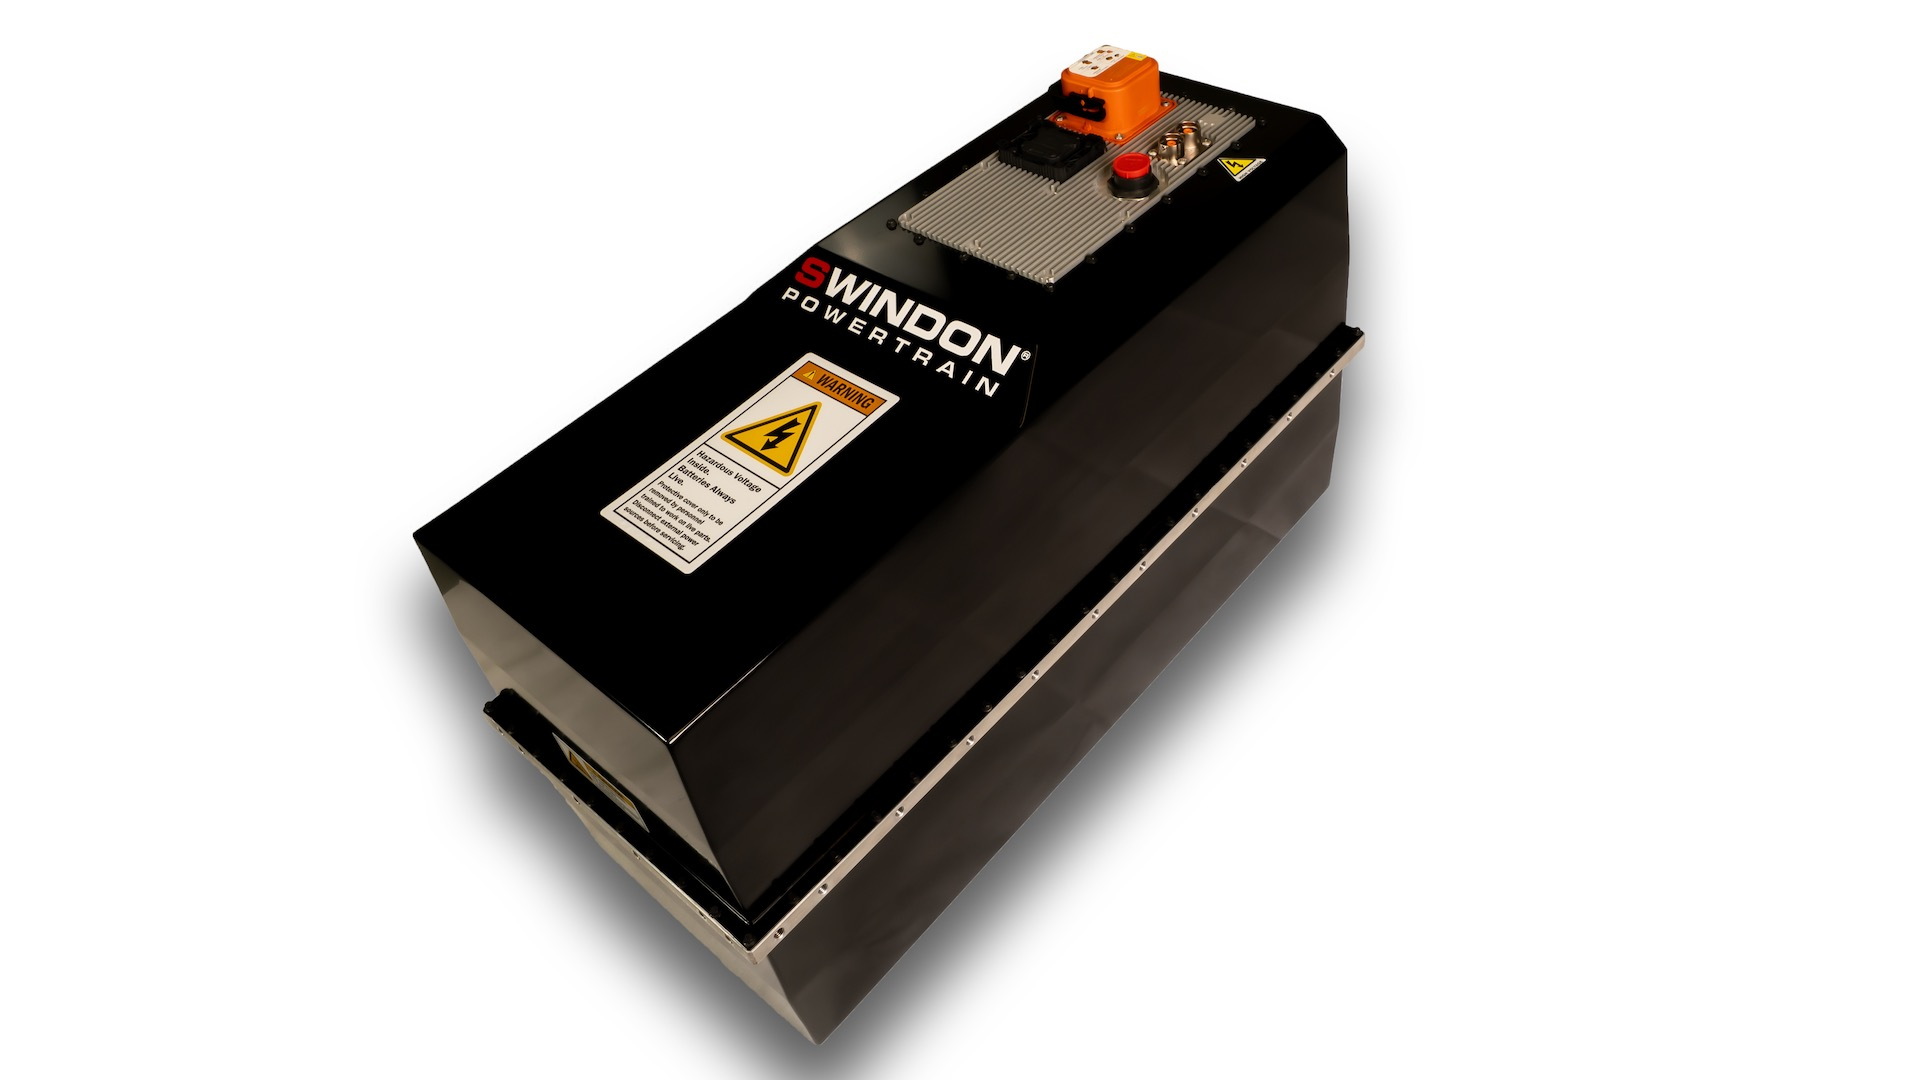 Swindown Powertrain HED 60-kwh battery pack